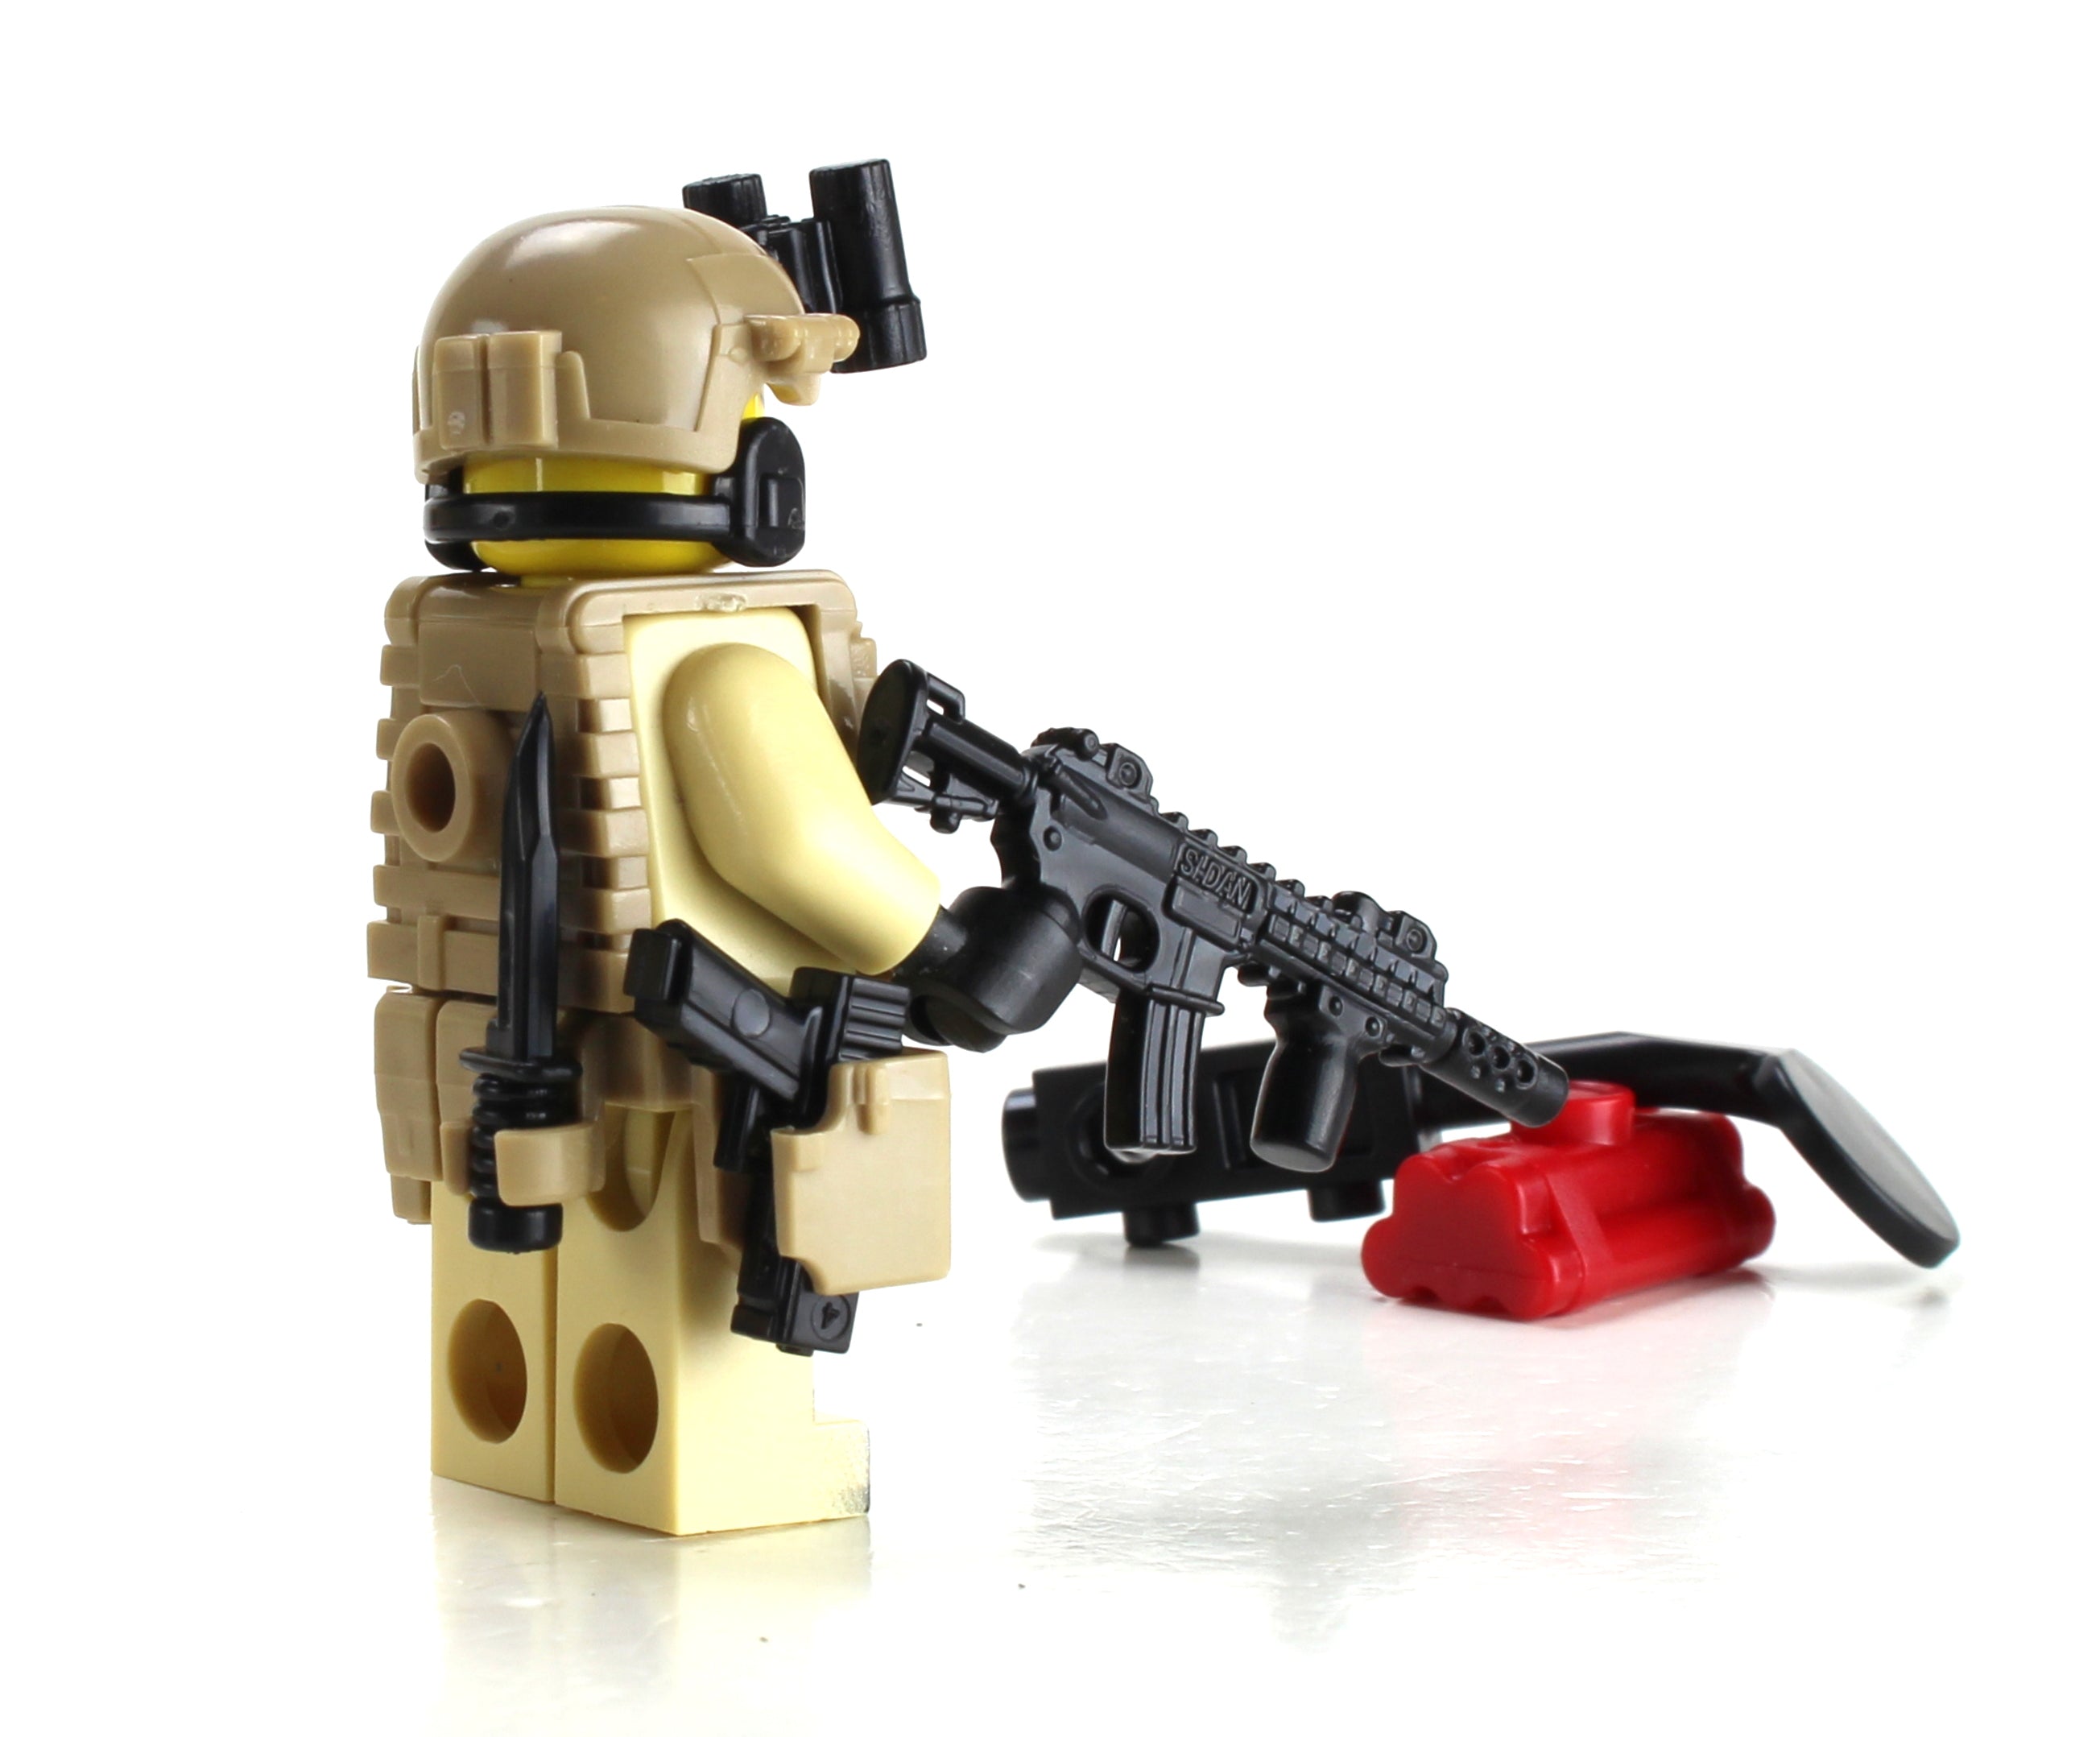 EOD Explosive Ordnance Disposal Specialist Minifig made using LEGO bricks